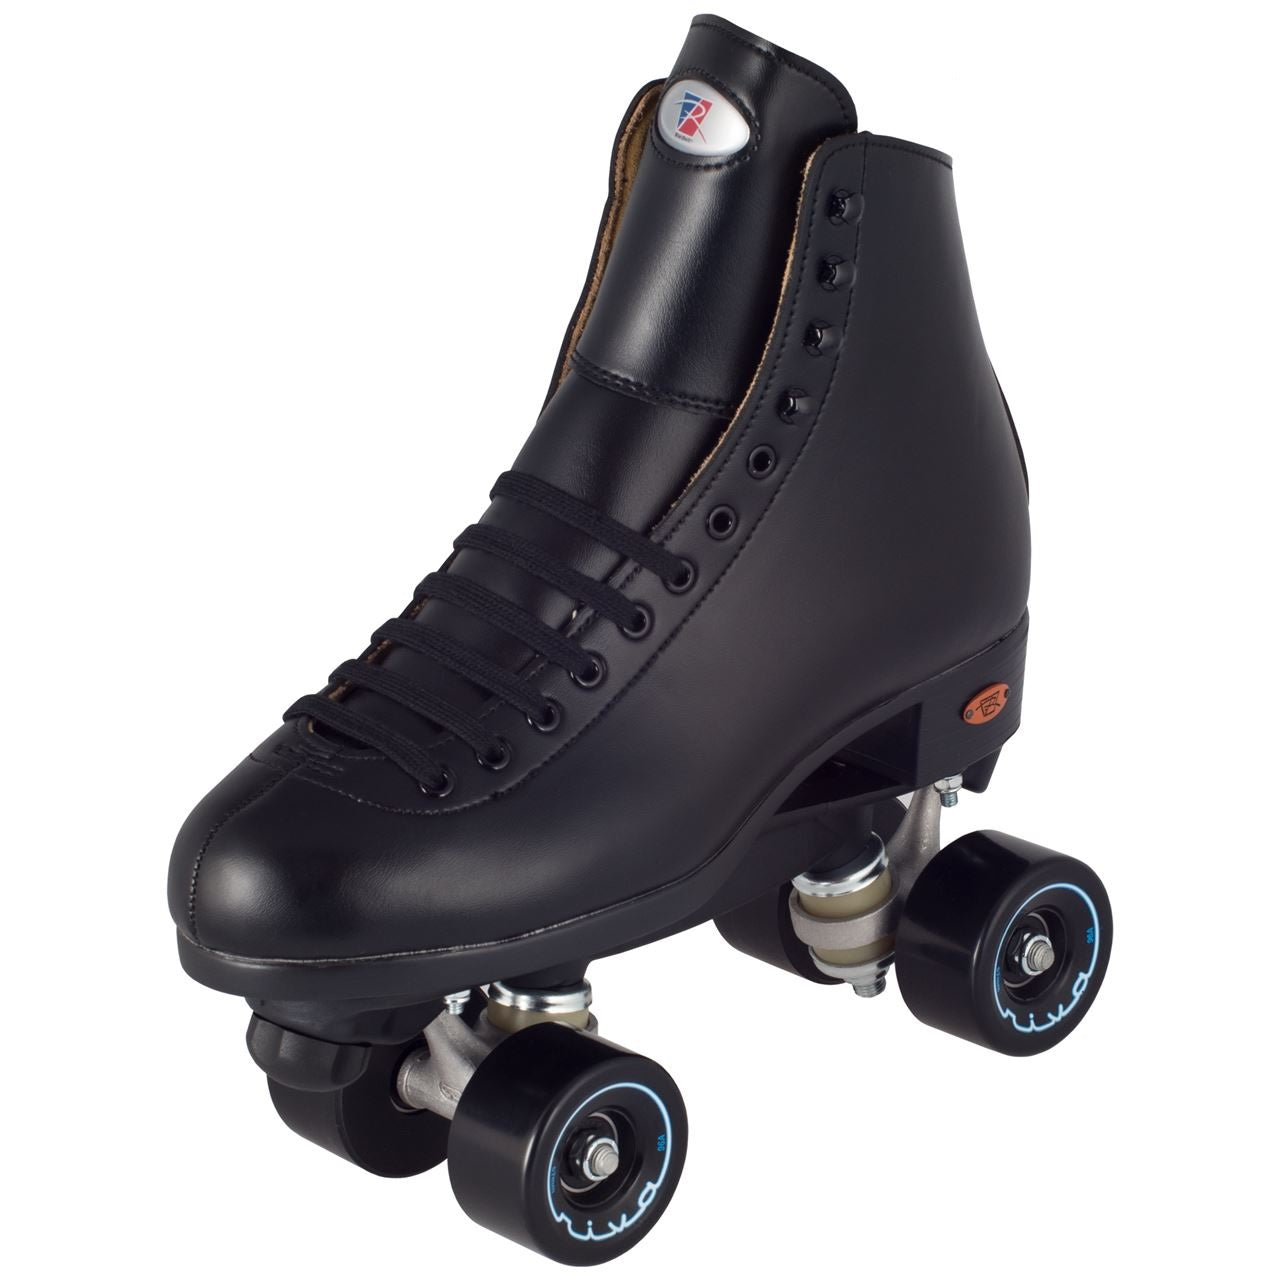 Riedell 111 Boost Roller Skates Black - Wide D Width